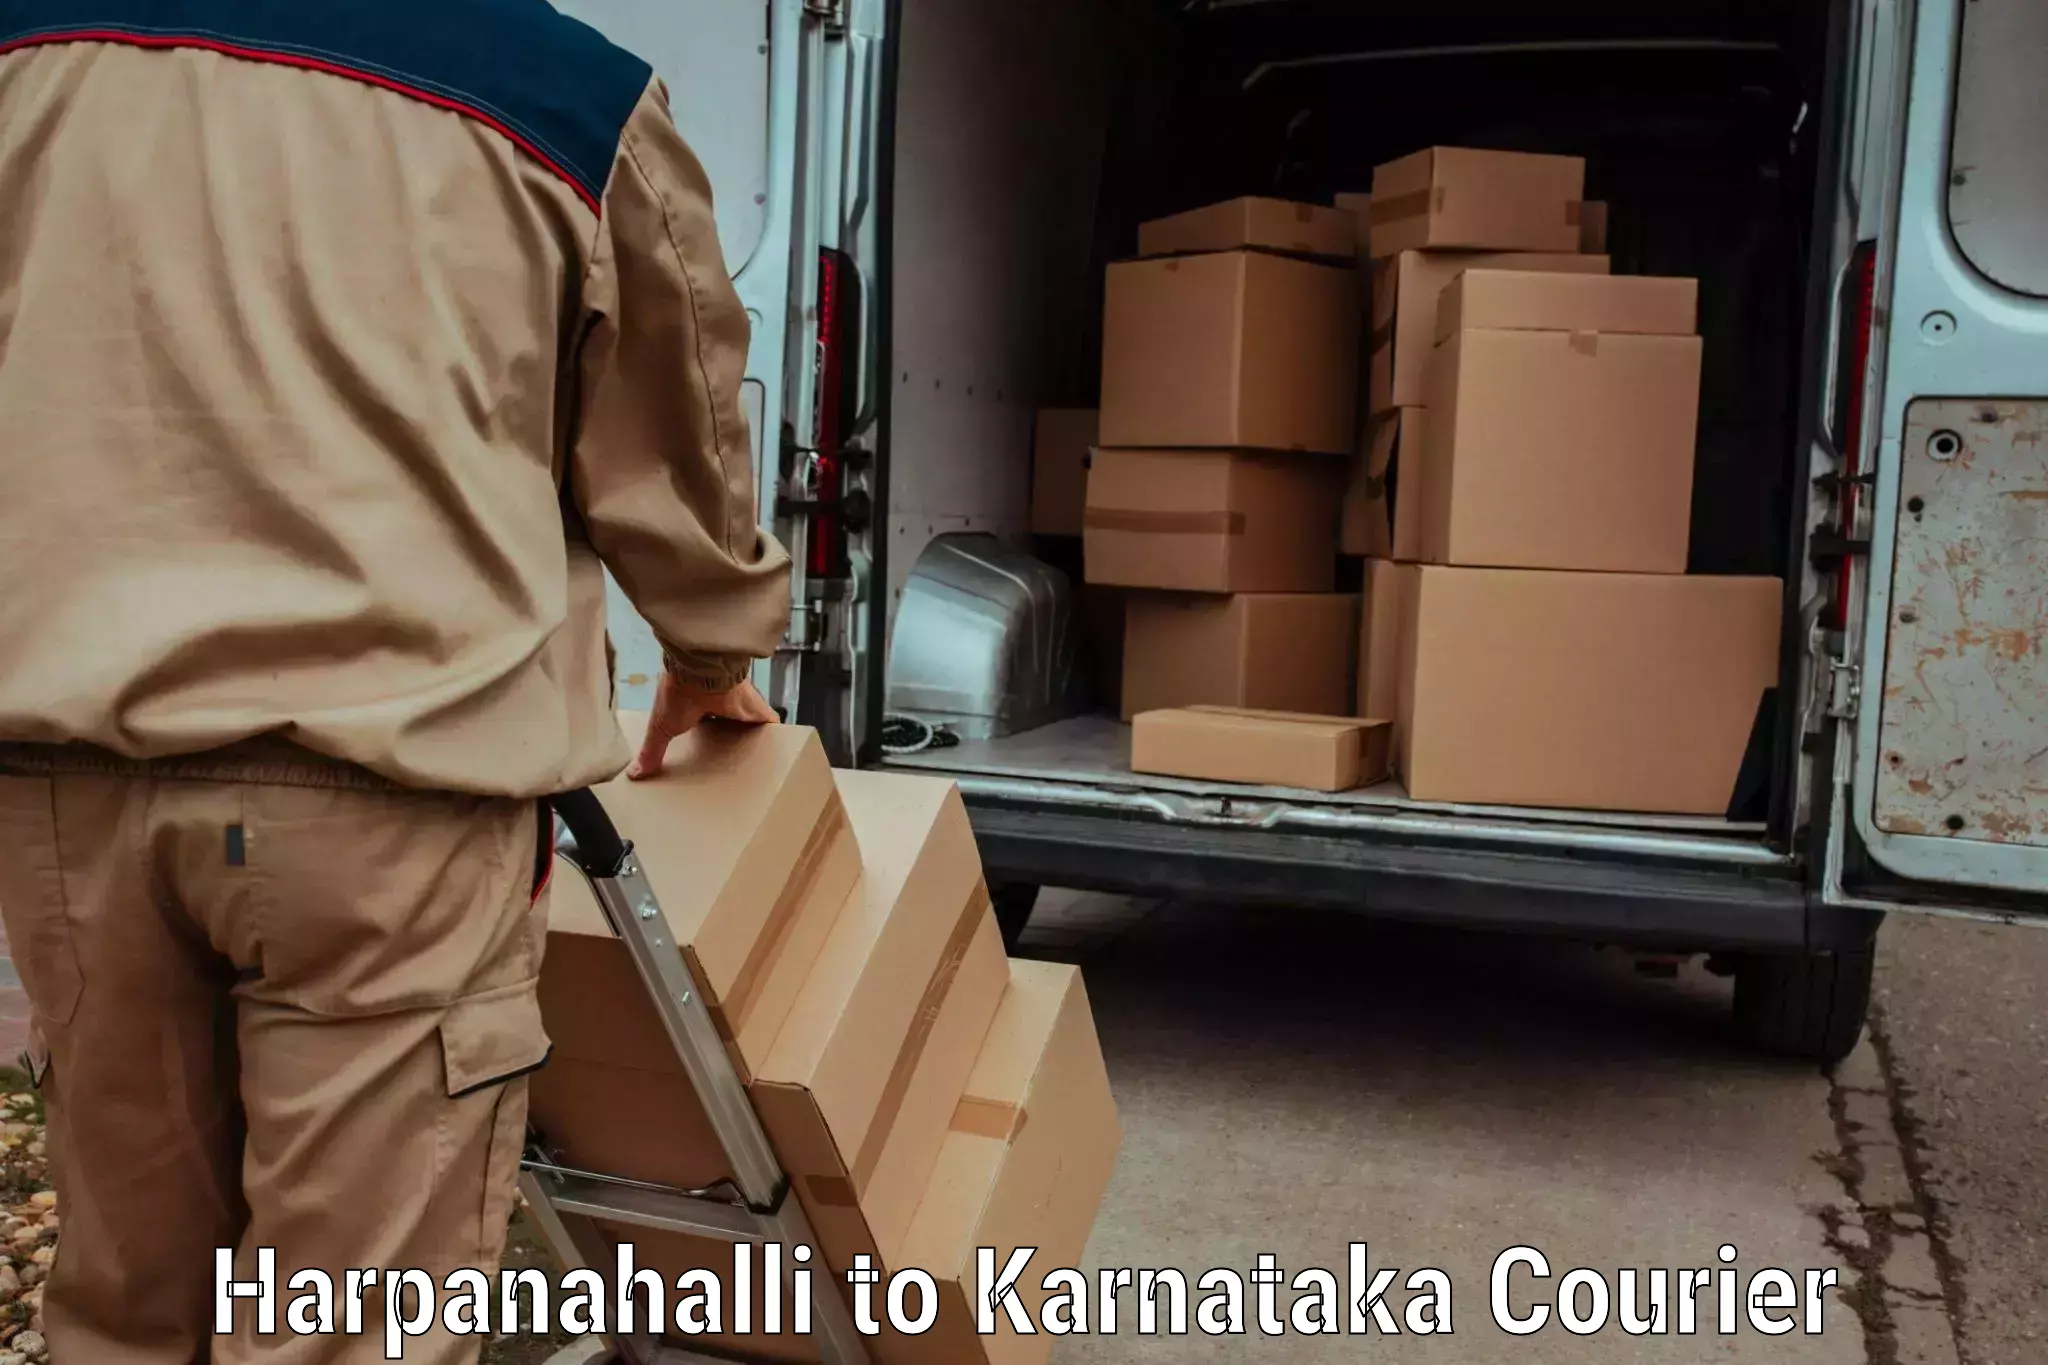 Quick dispatch service in Harpanahalli to Kulshekar